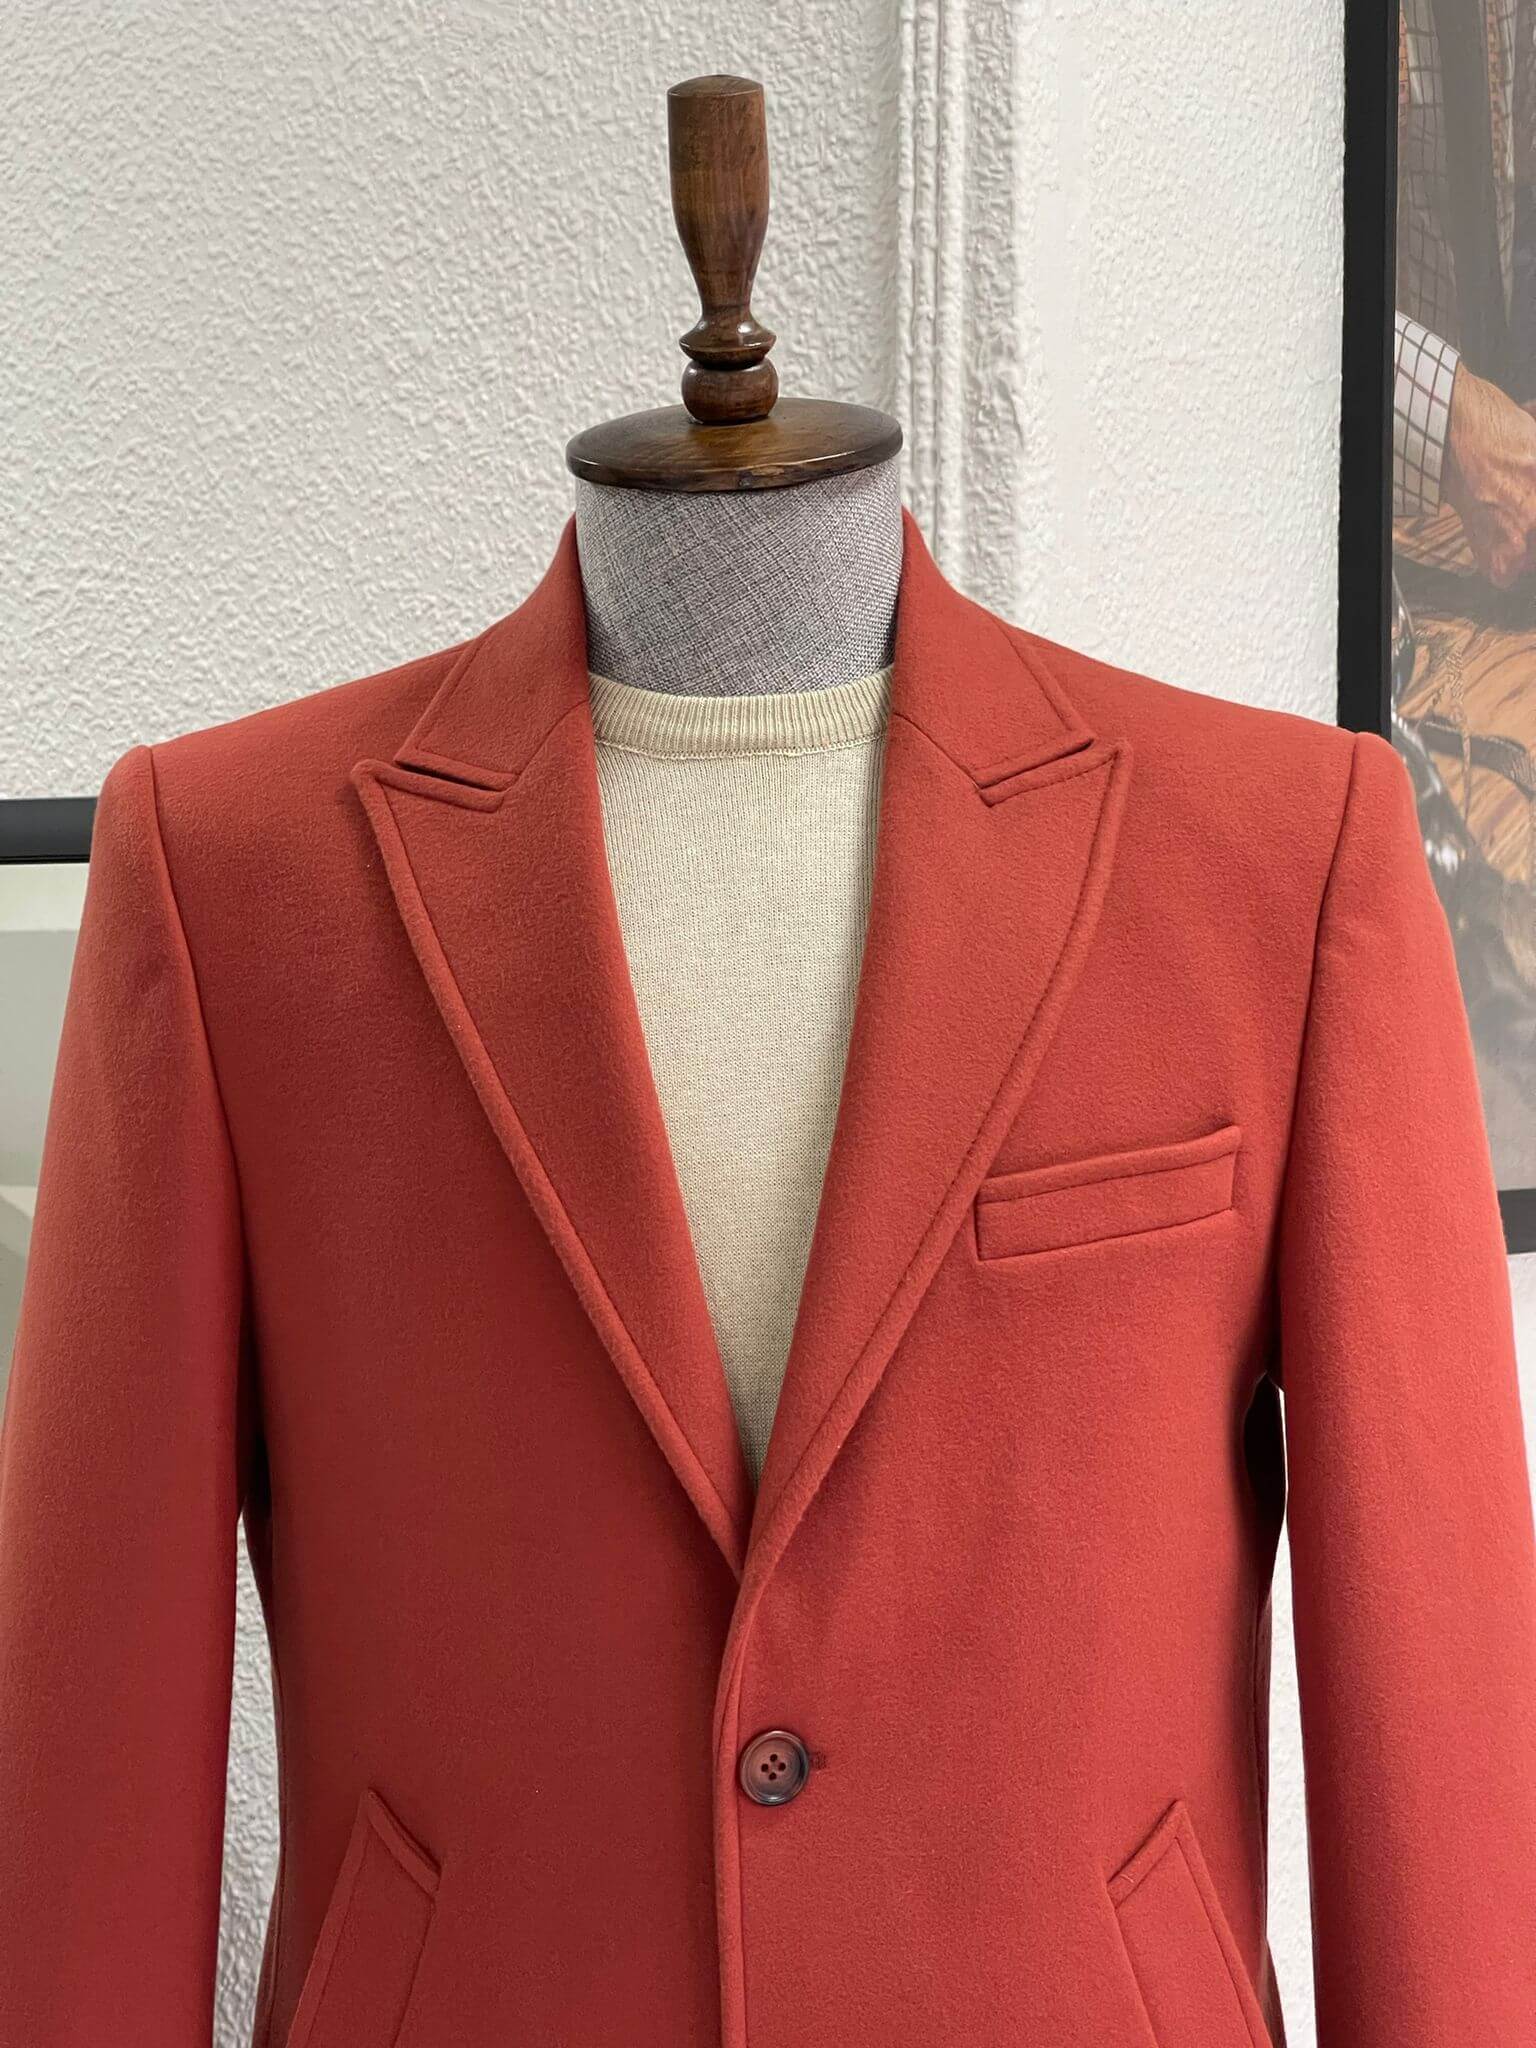 Stylish wool coat featuring Birmingham Tile design